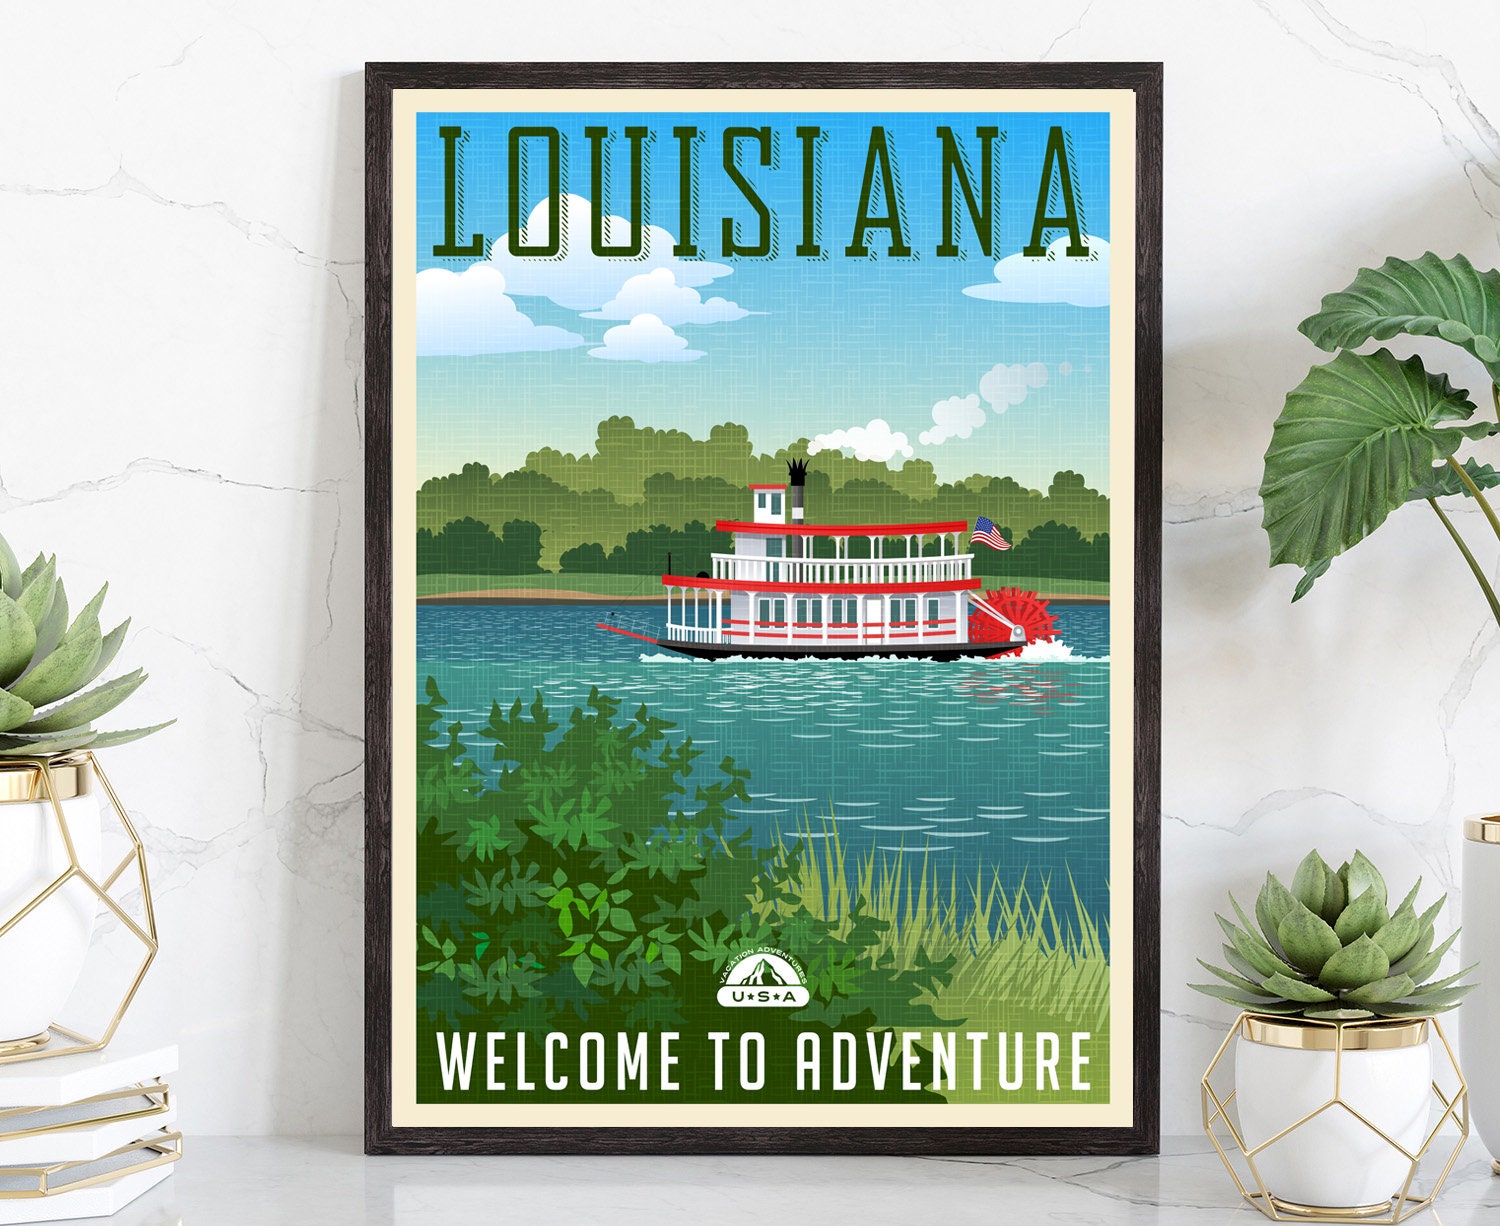 Louisiana Vintage Rustic Poster Print, Retro Style Travel Poster